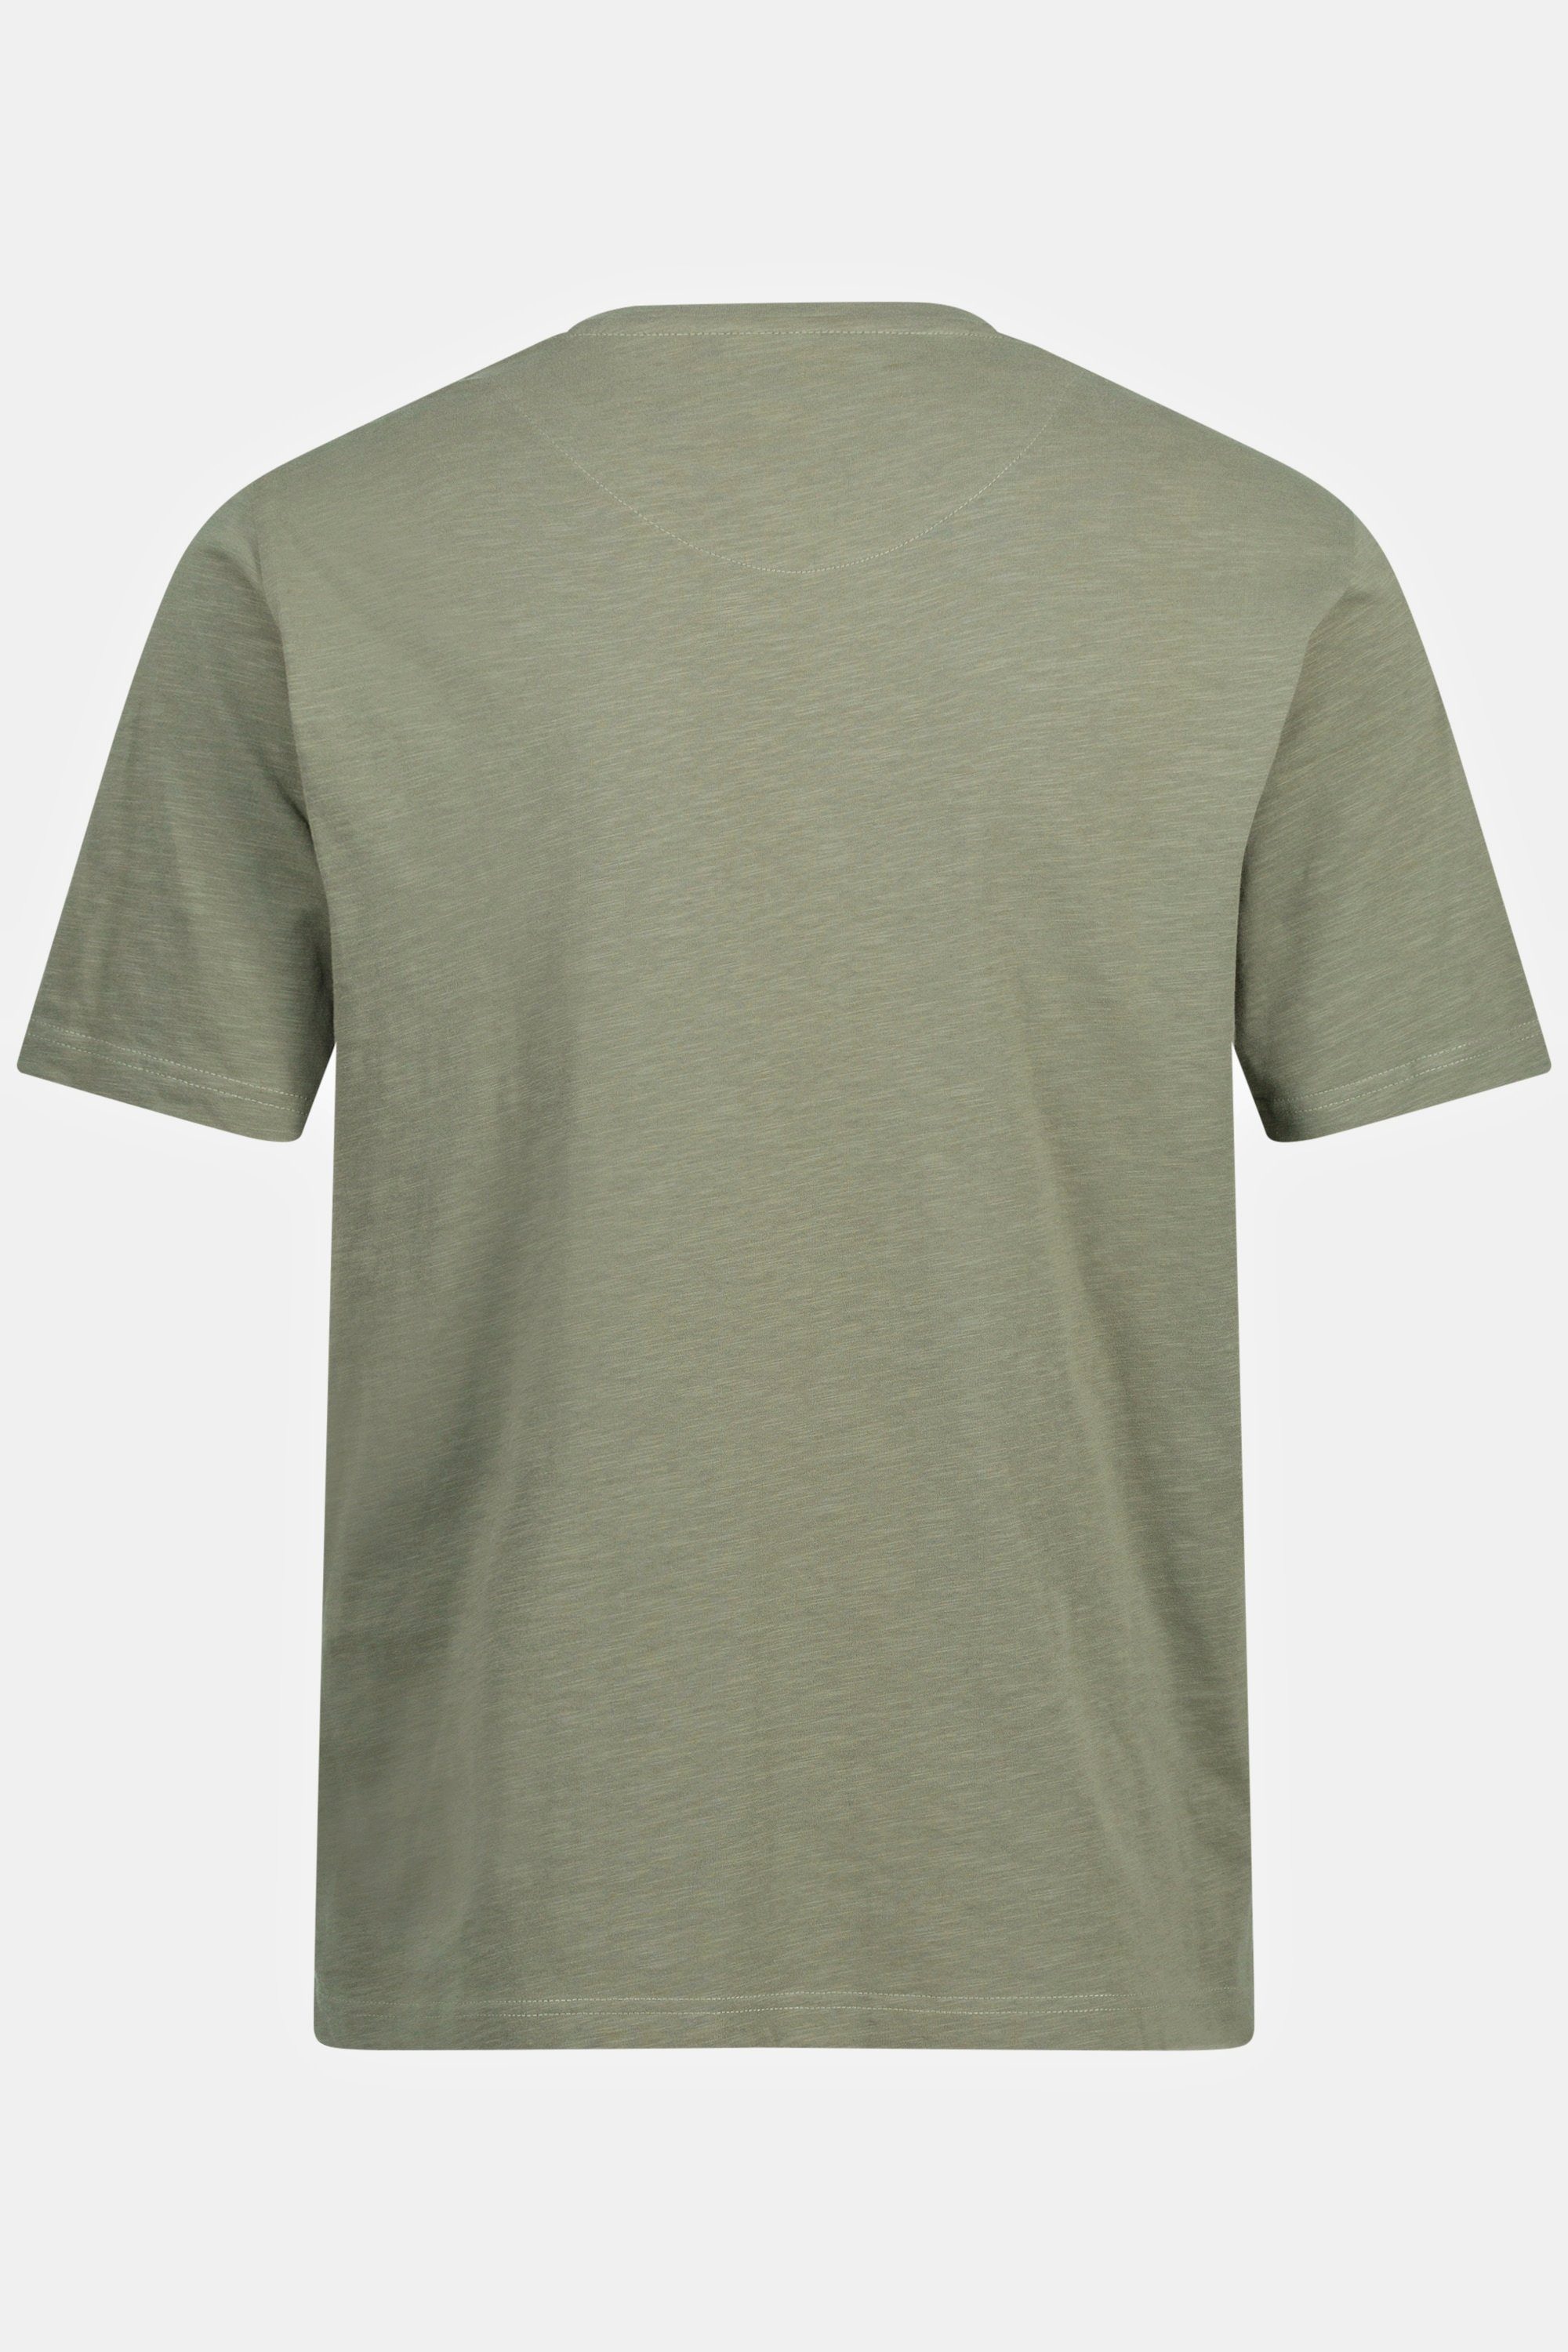 JP1880 T-Shirt T-Shirt Basic Halbarm Flammjersey V-Ausschnitt kaktus